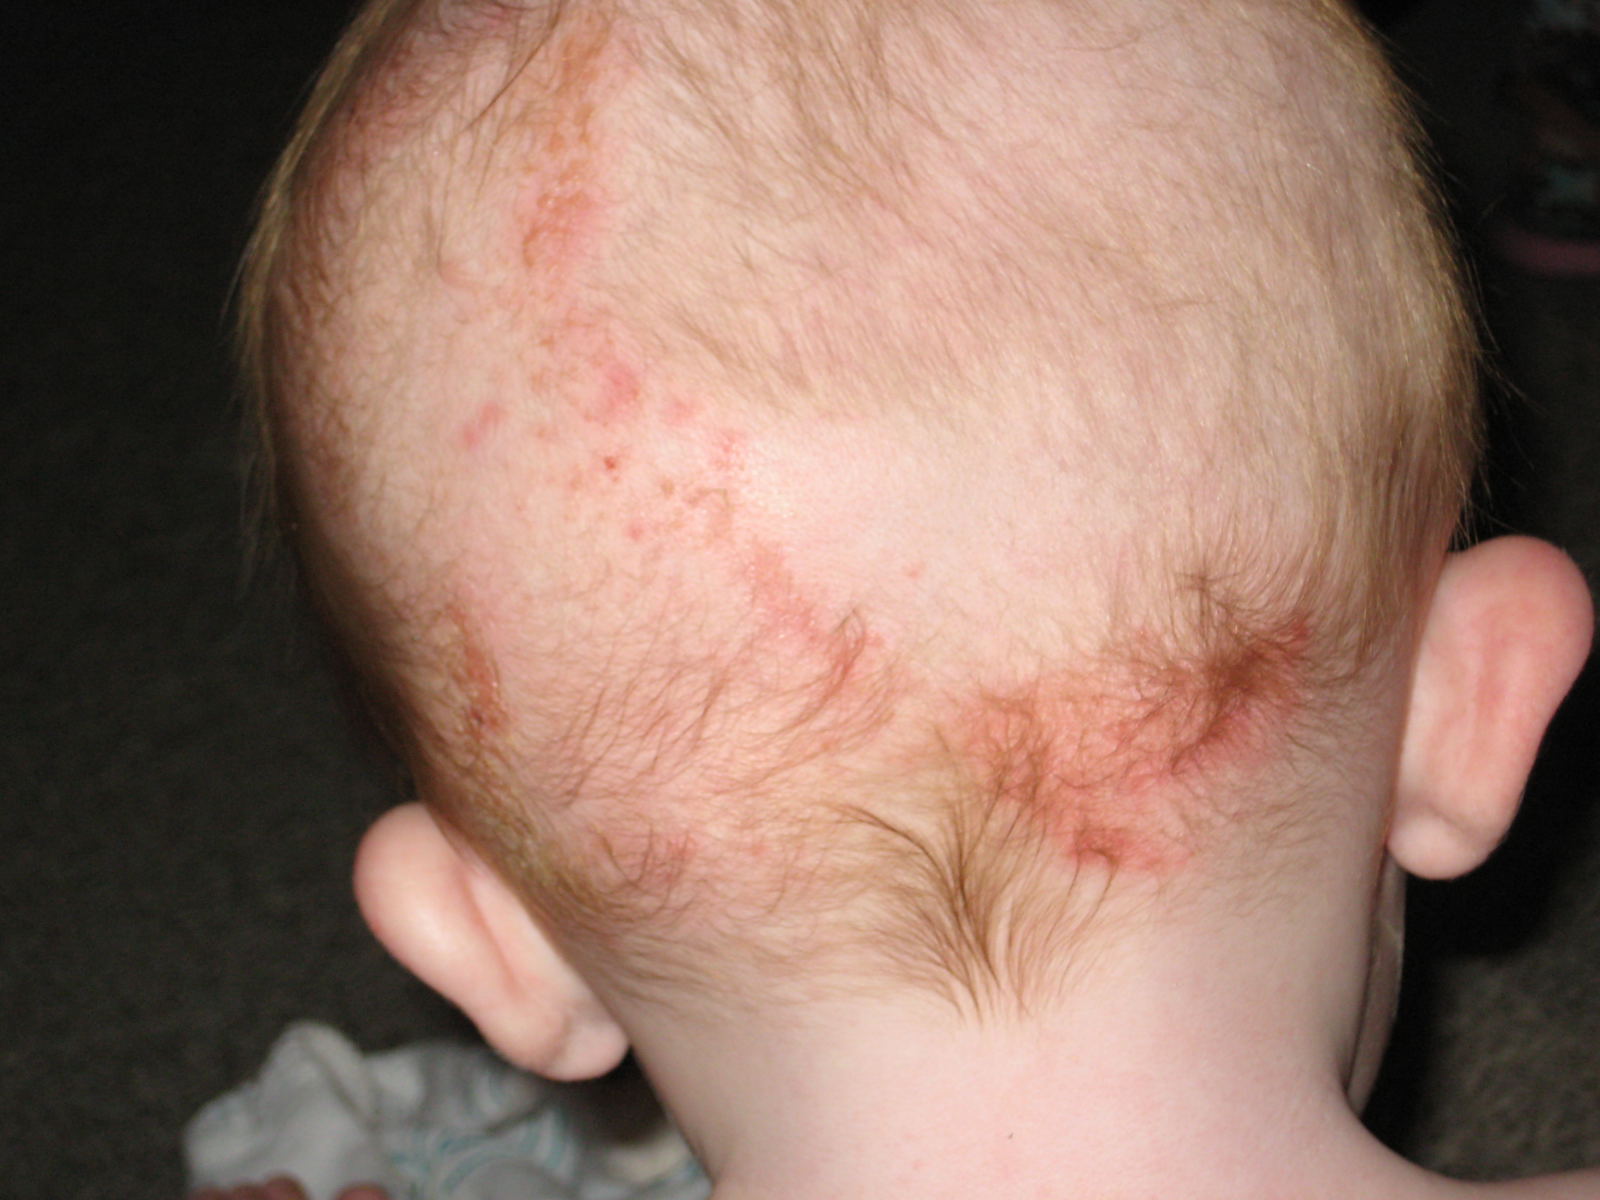 Head rash Treatments - RightDiagnosis.com